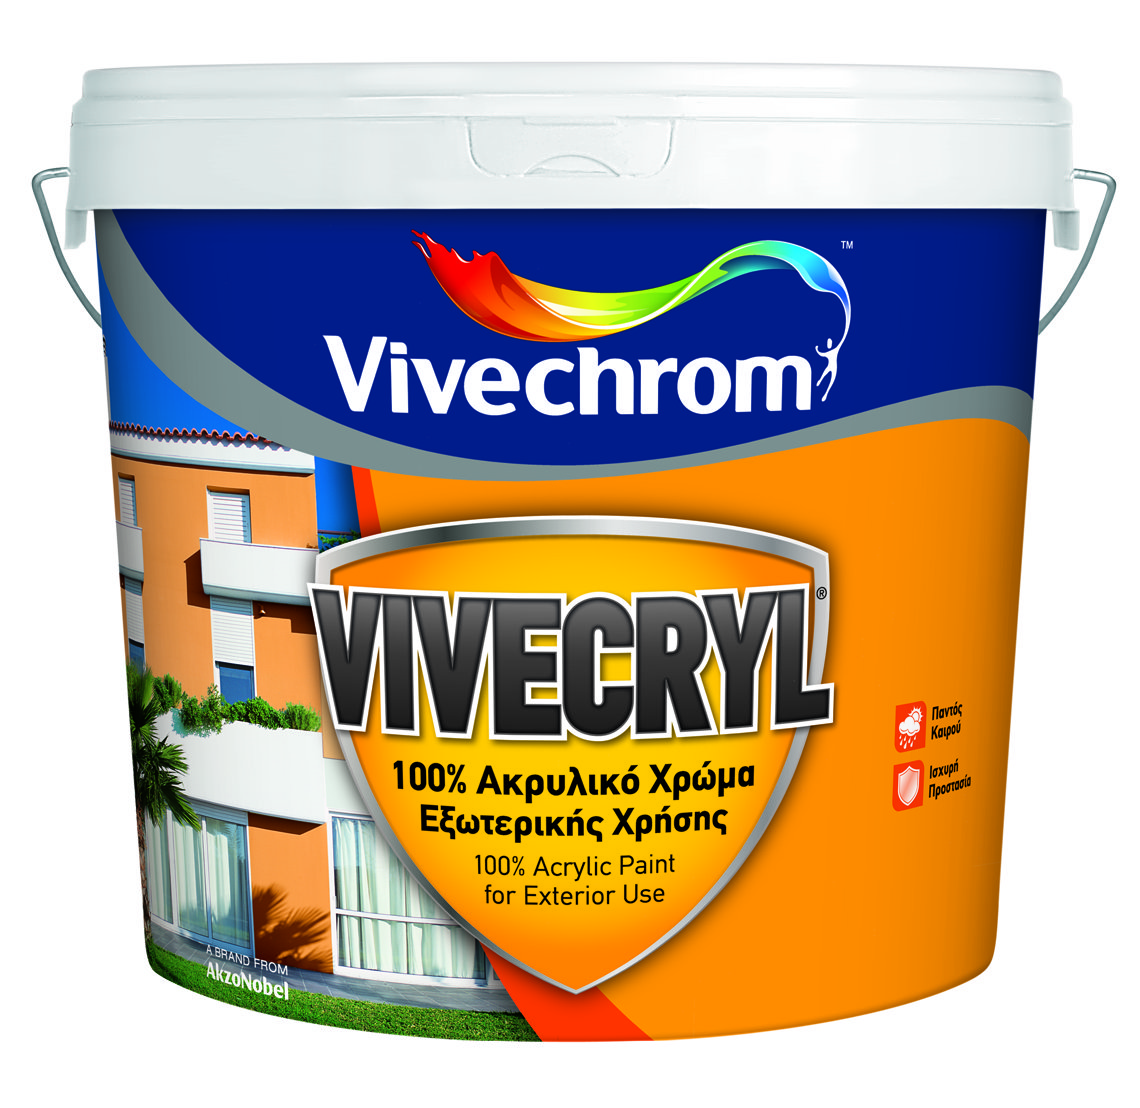 Vivechrom Vivecryl Ακρυλικό Οικολογικό Χρώμα Matt Finish Βάση D 10L